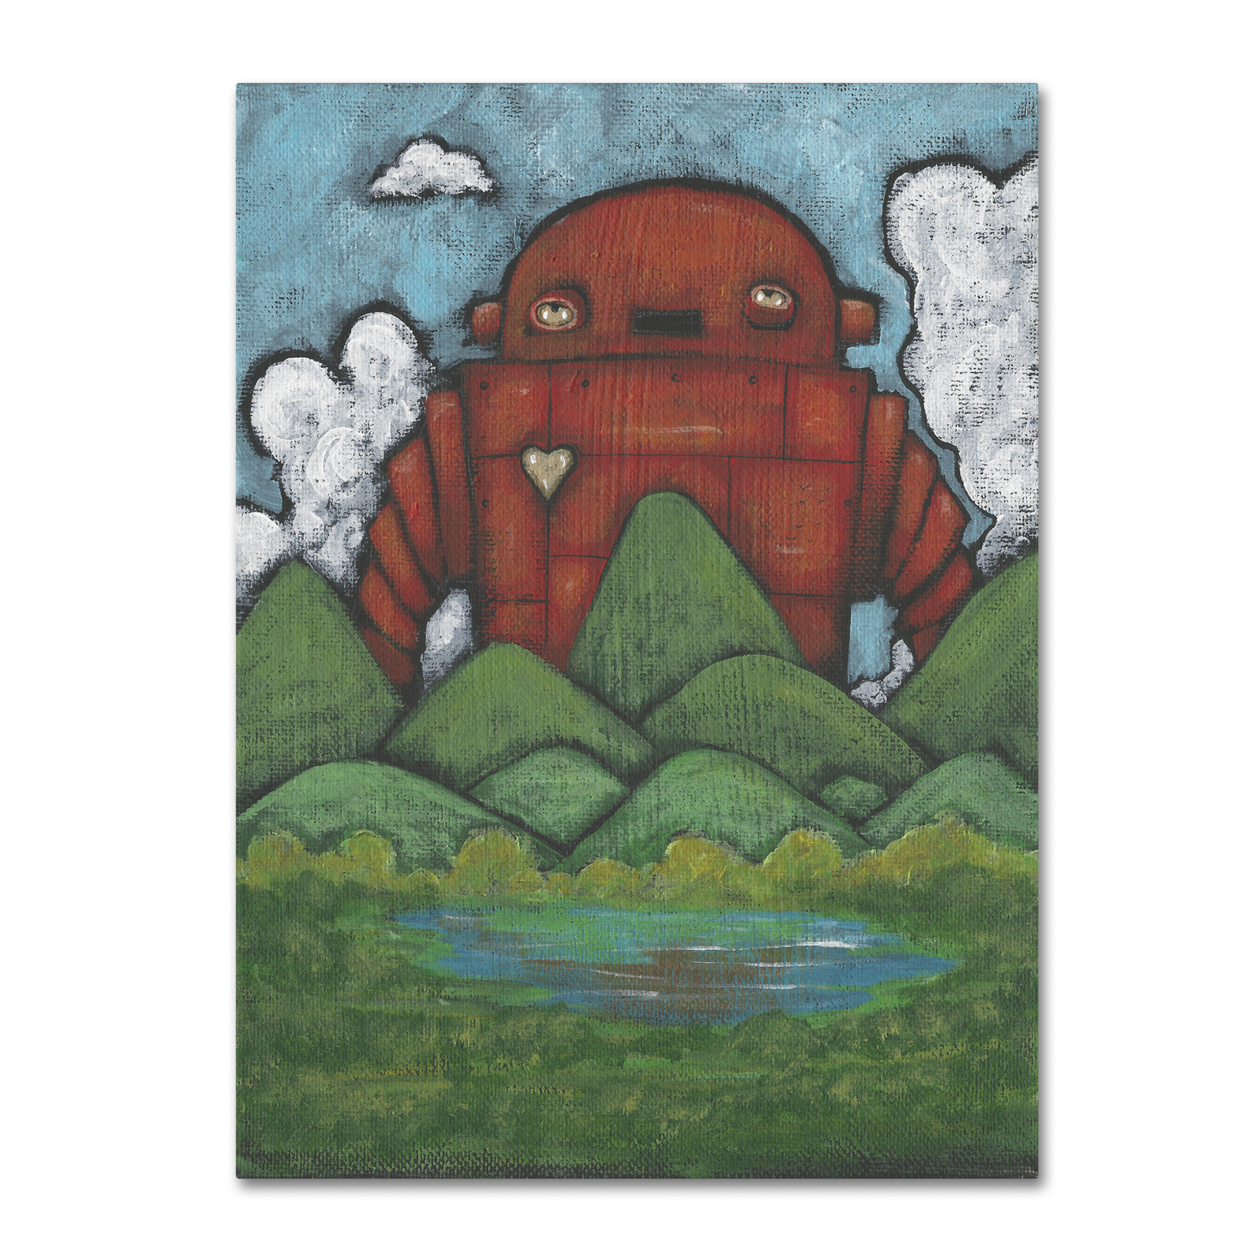 Craig Snodgrass 'Valley-Invader' Canvas Wall Art 35 X 47 Inches